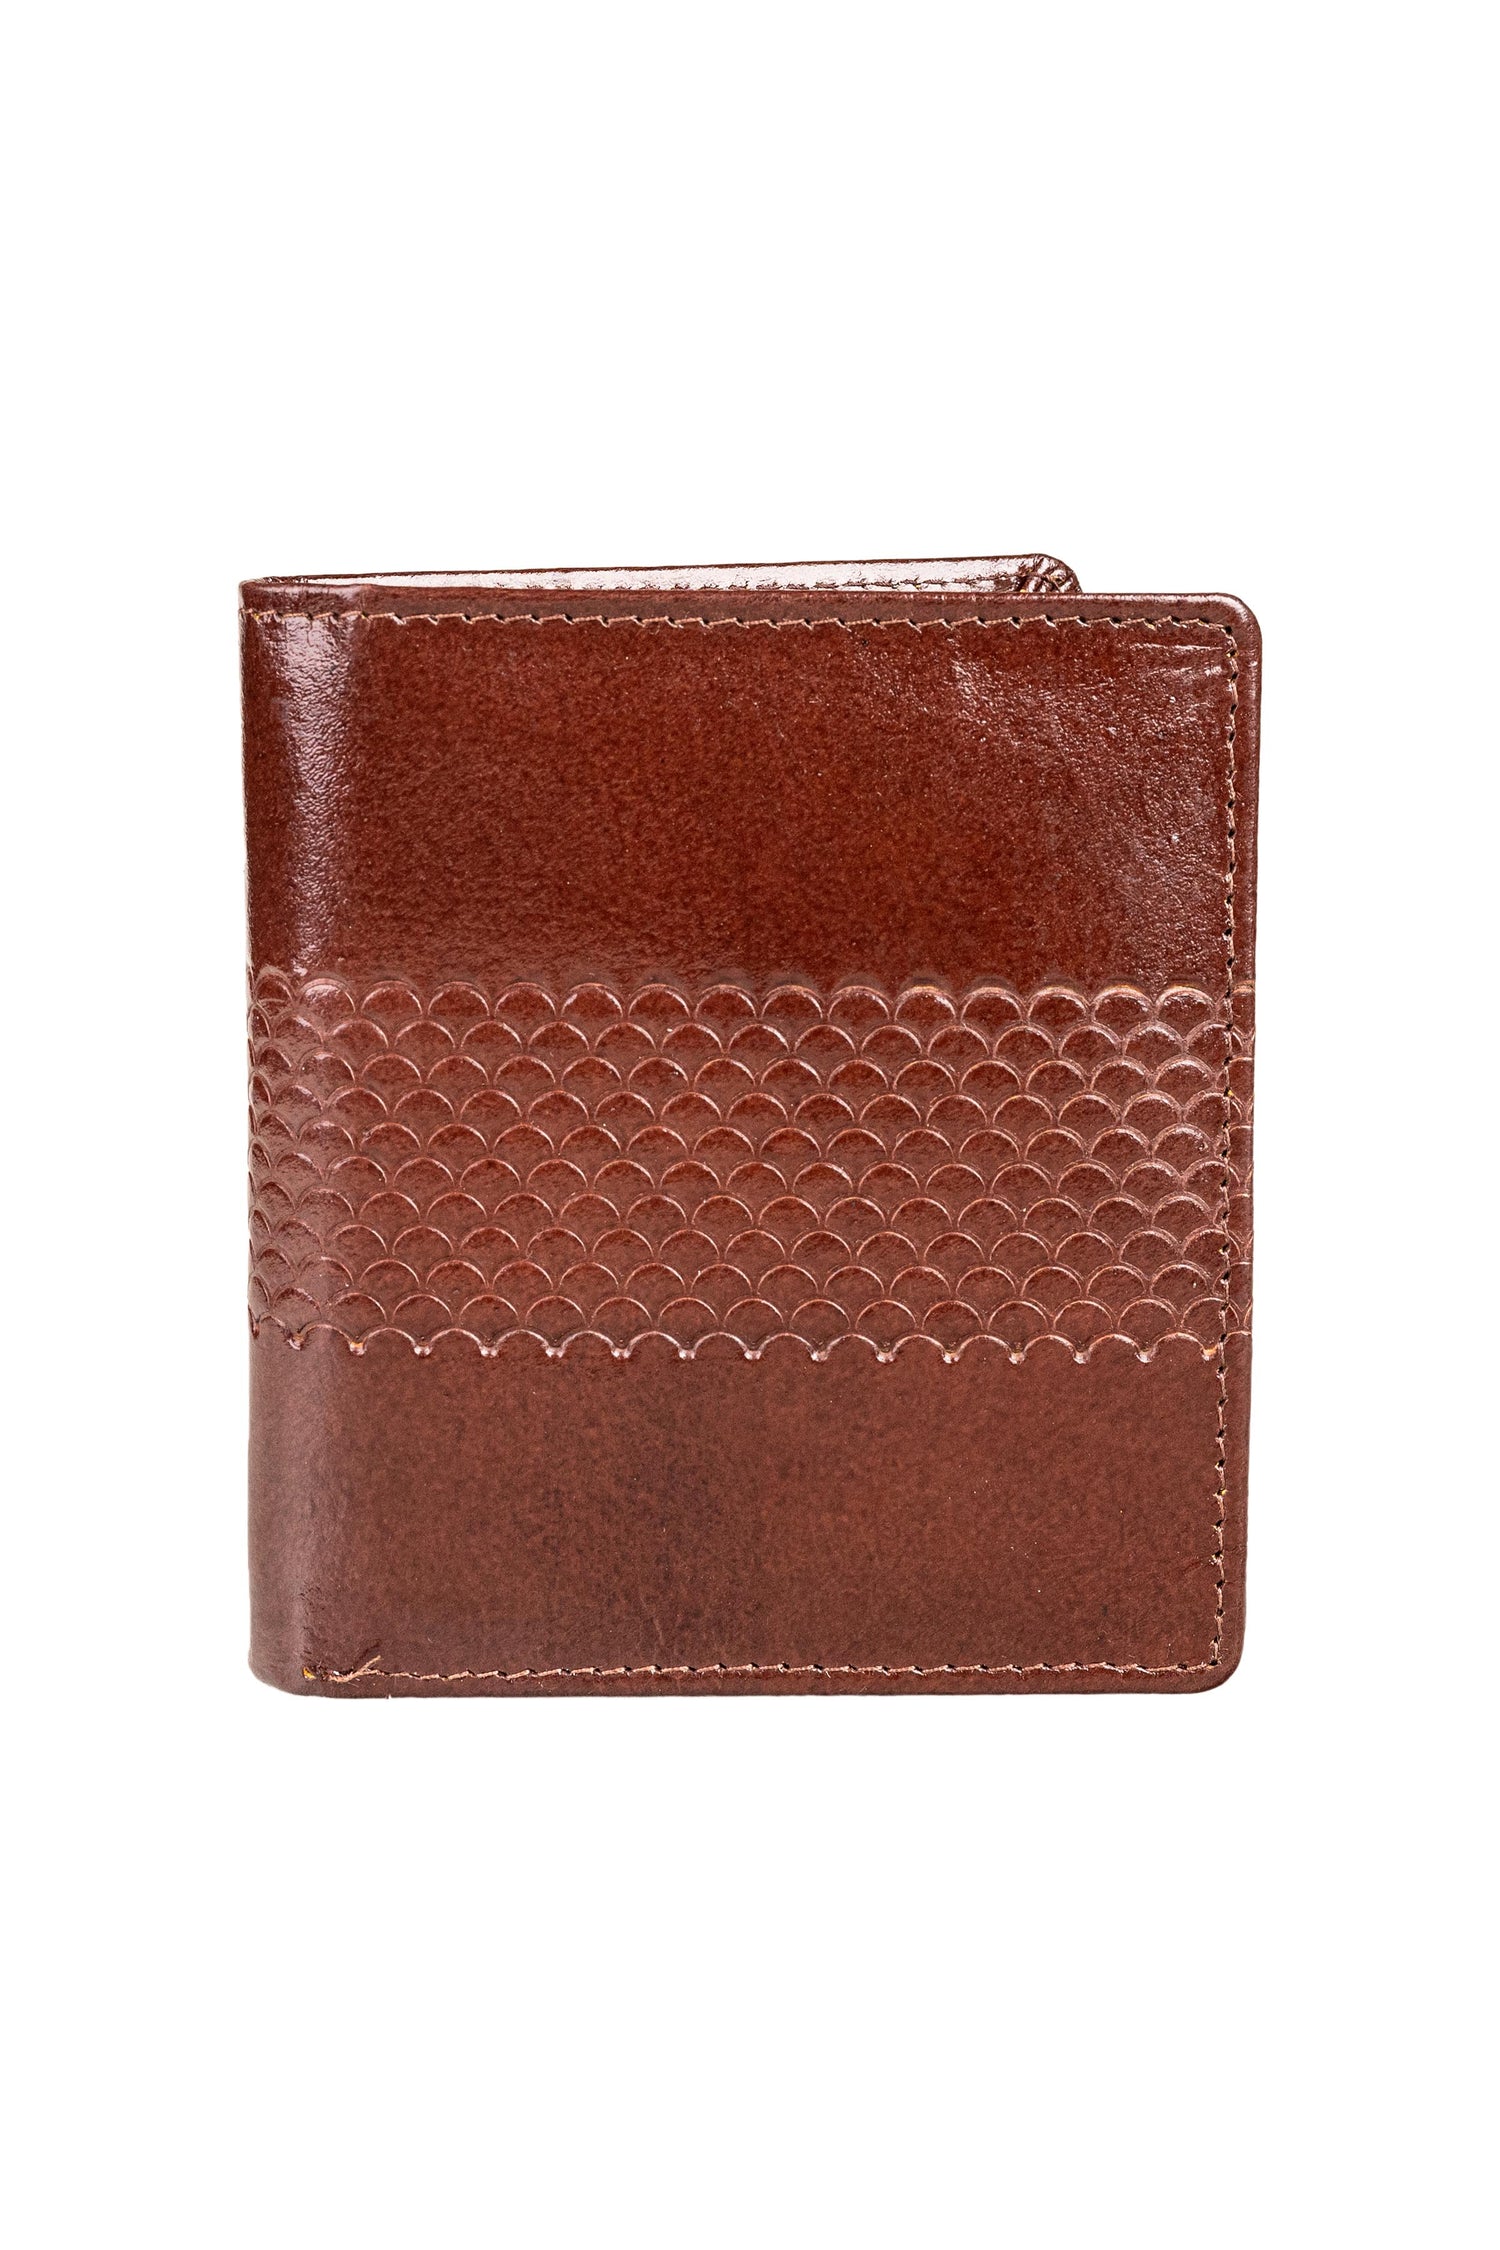 Titas Gents Cherry Genuine Leather Wallet